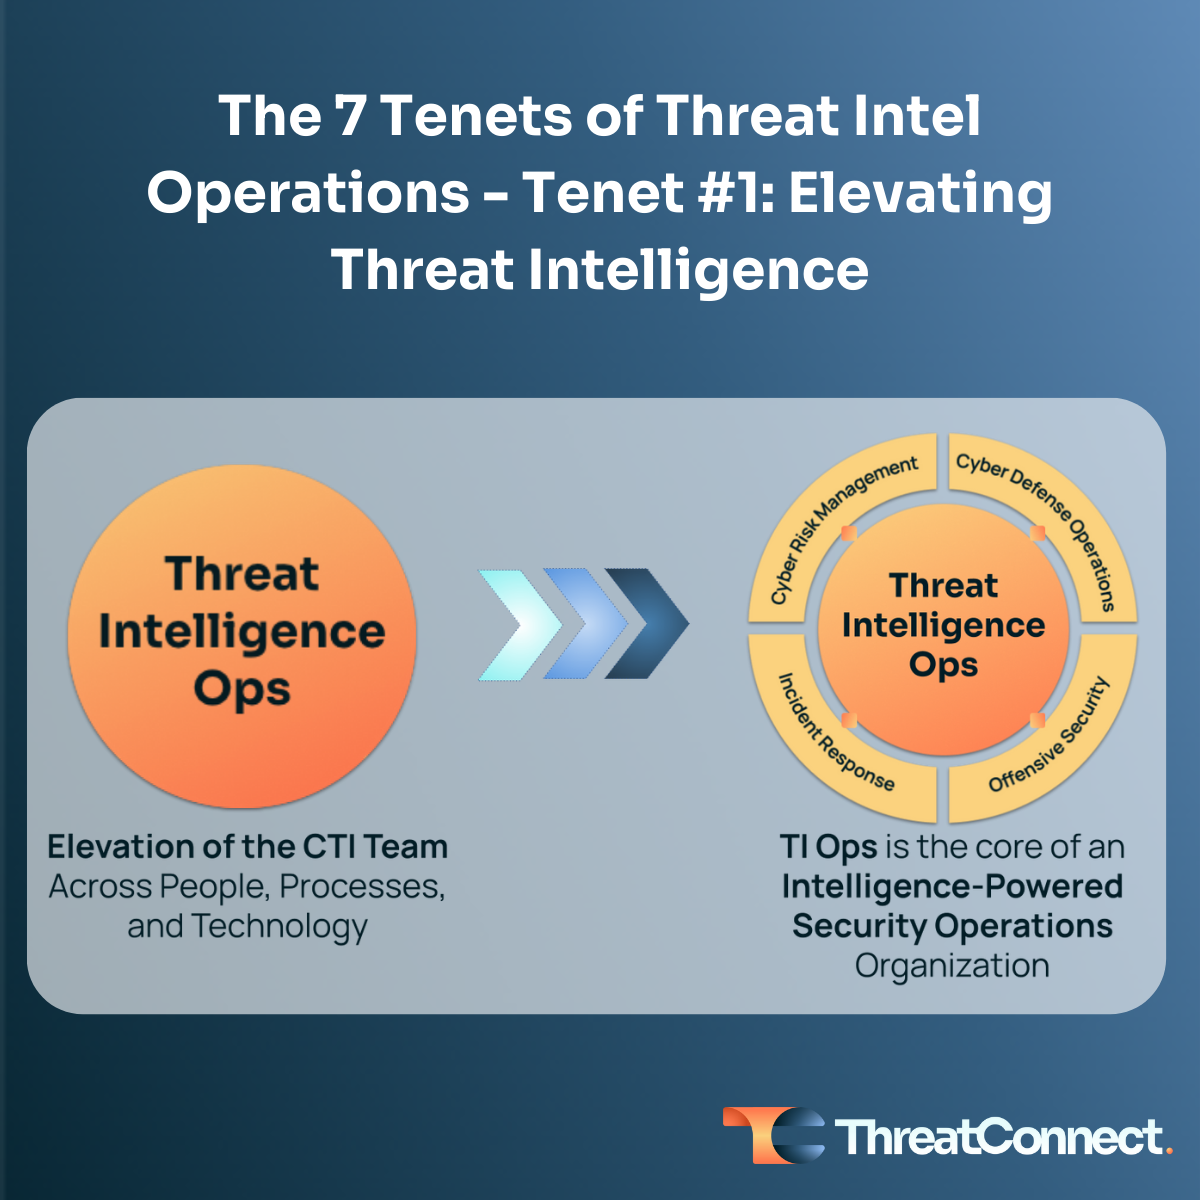 Elevating Threat Intelligence for threat intelligence operations